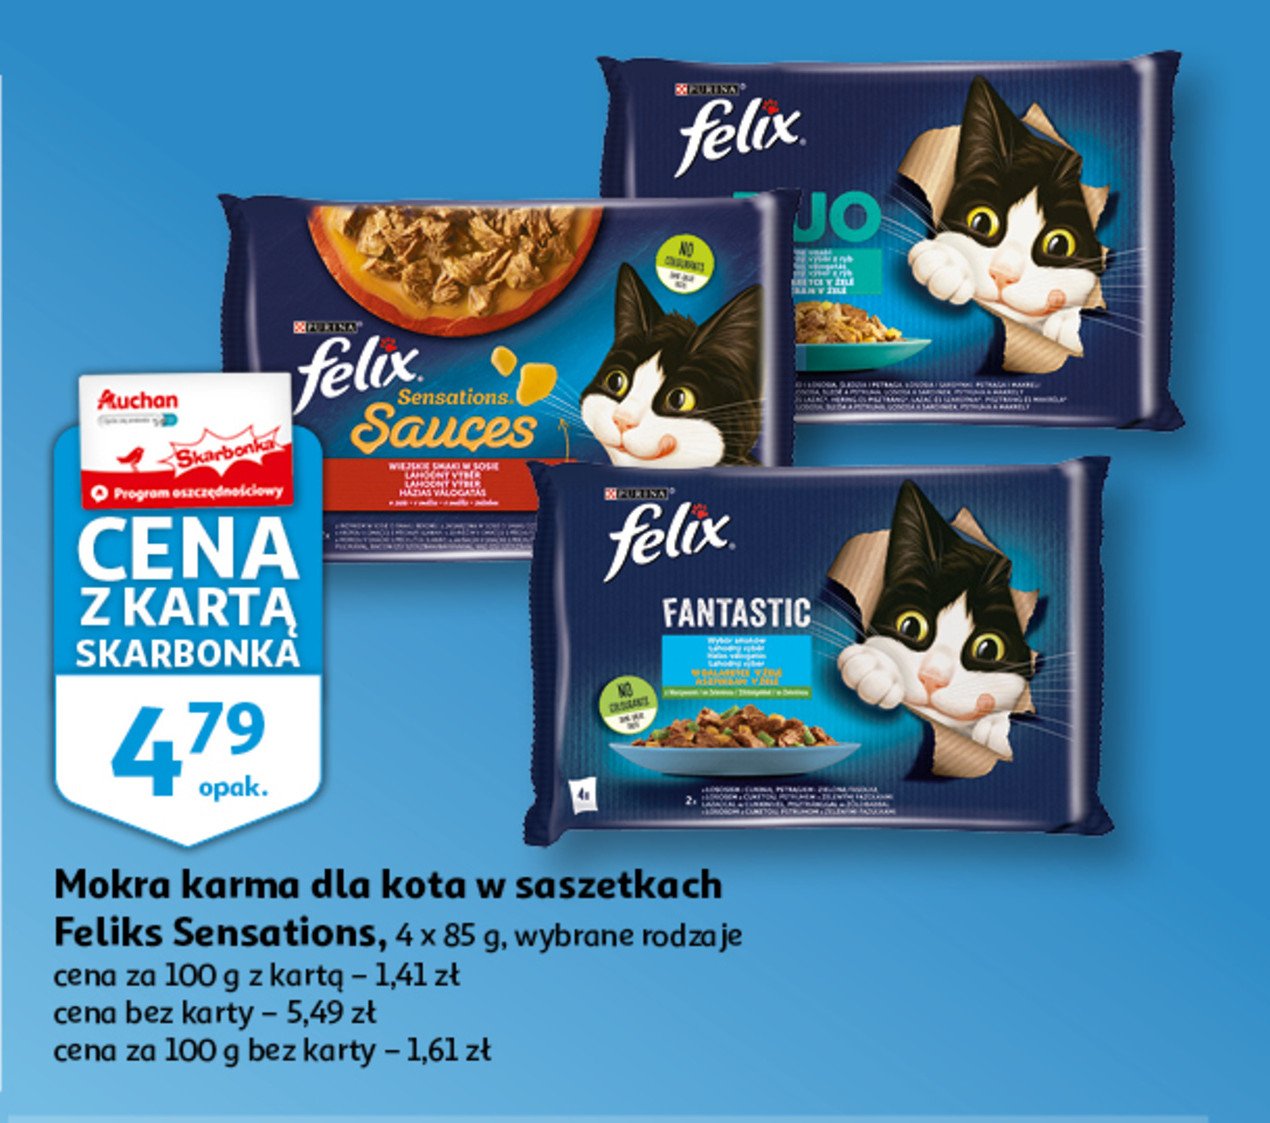 Karma dla kota indyk + jagnięcina Purina felix sensations sauces promocja